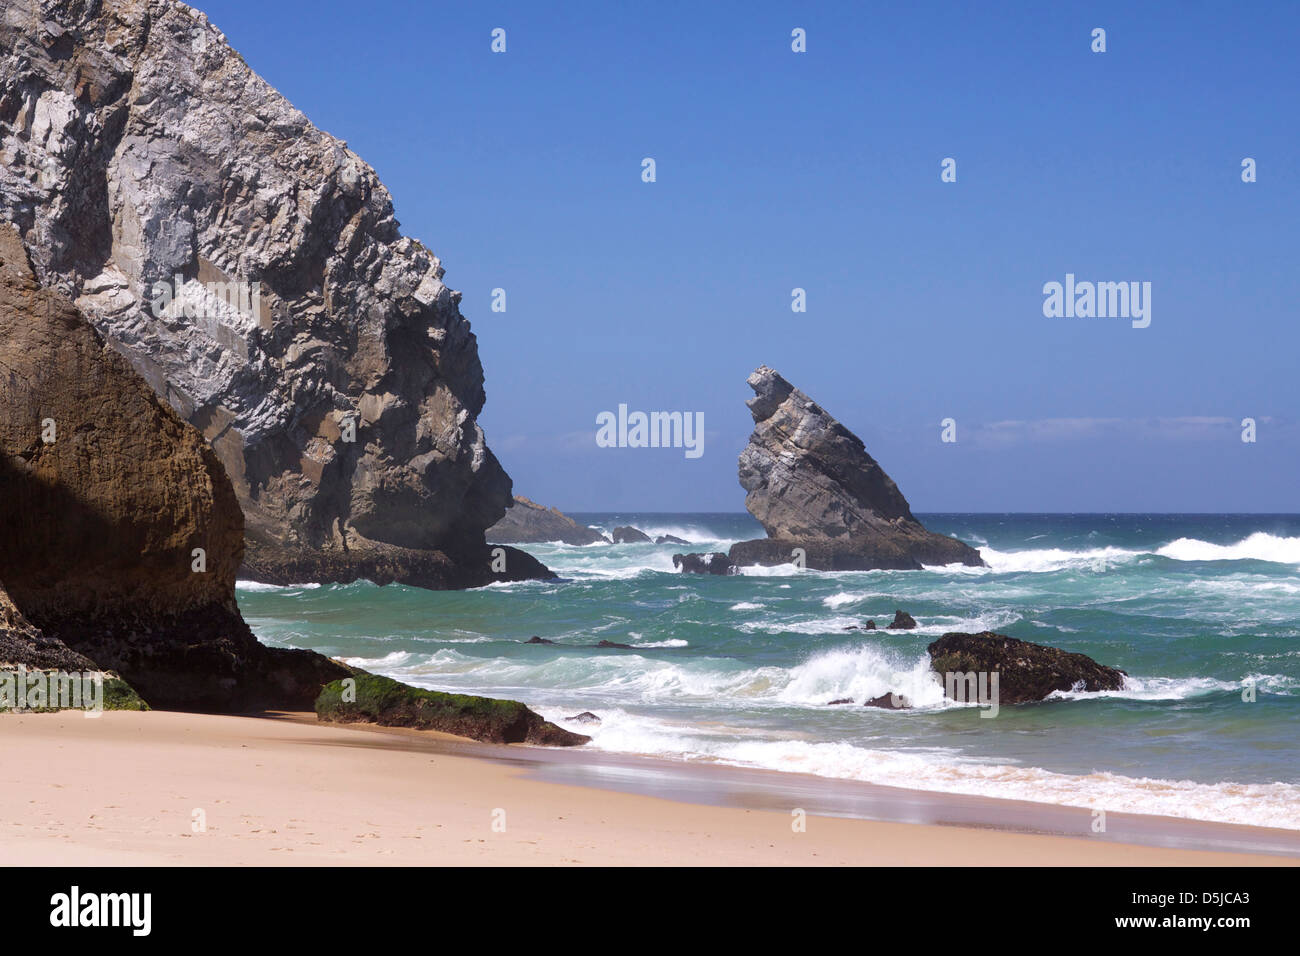 Adraga Beach Colares Portugal travel destination Stock Photo - Alamy